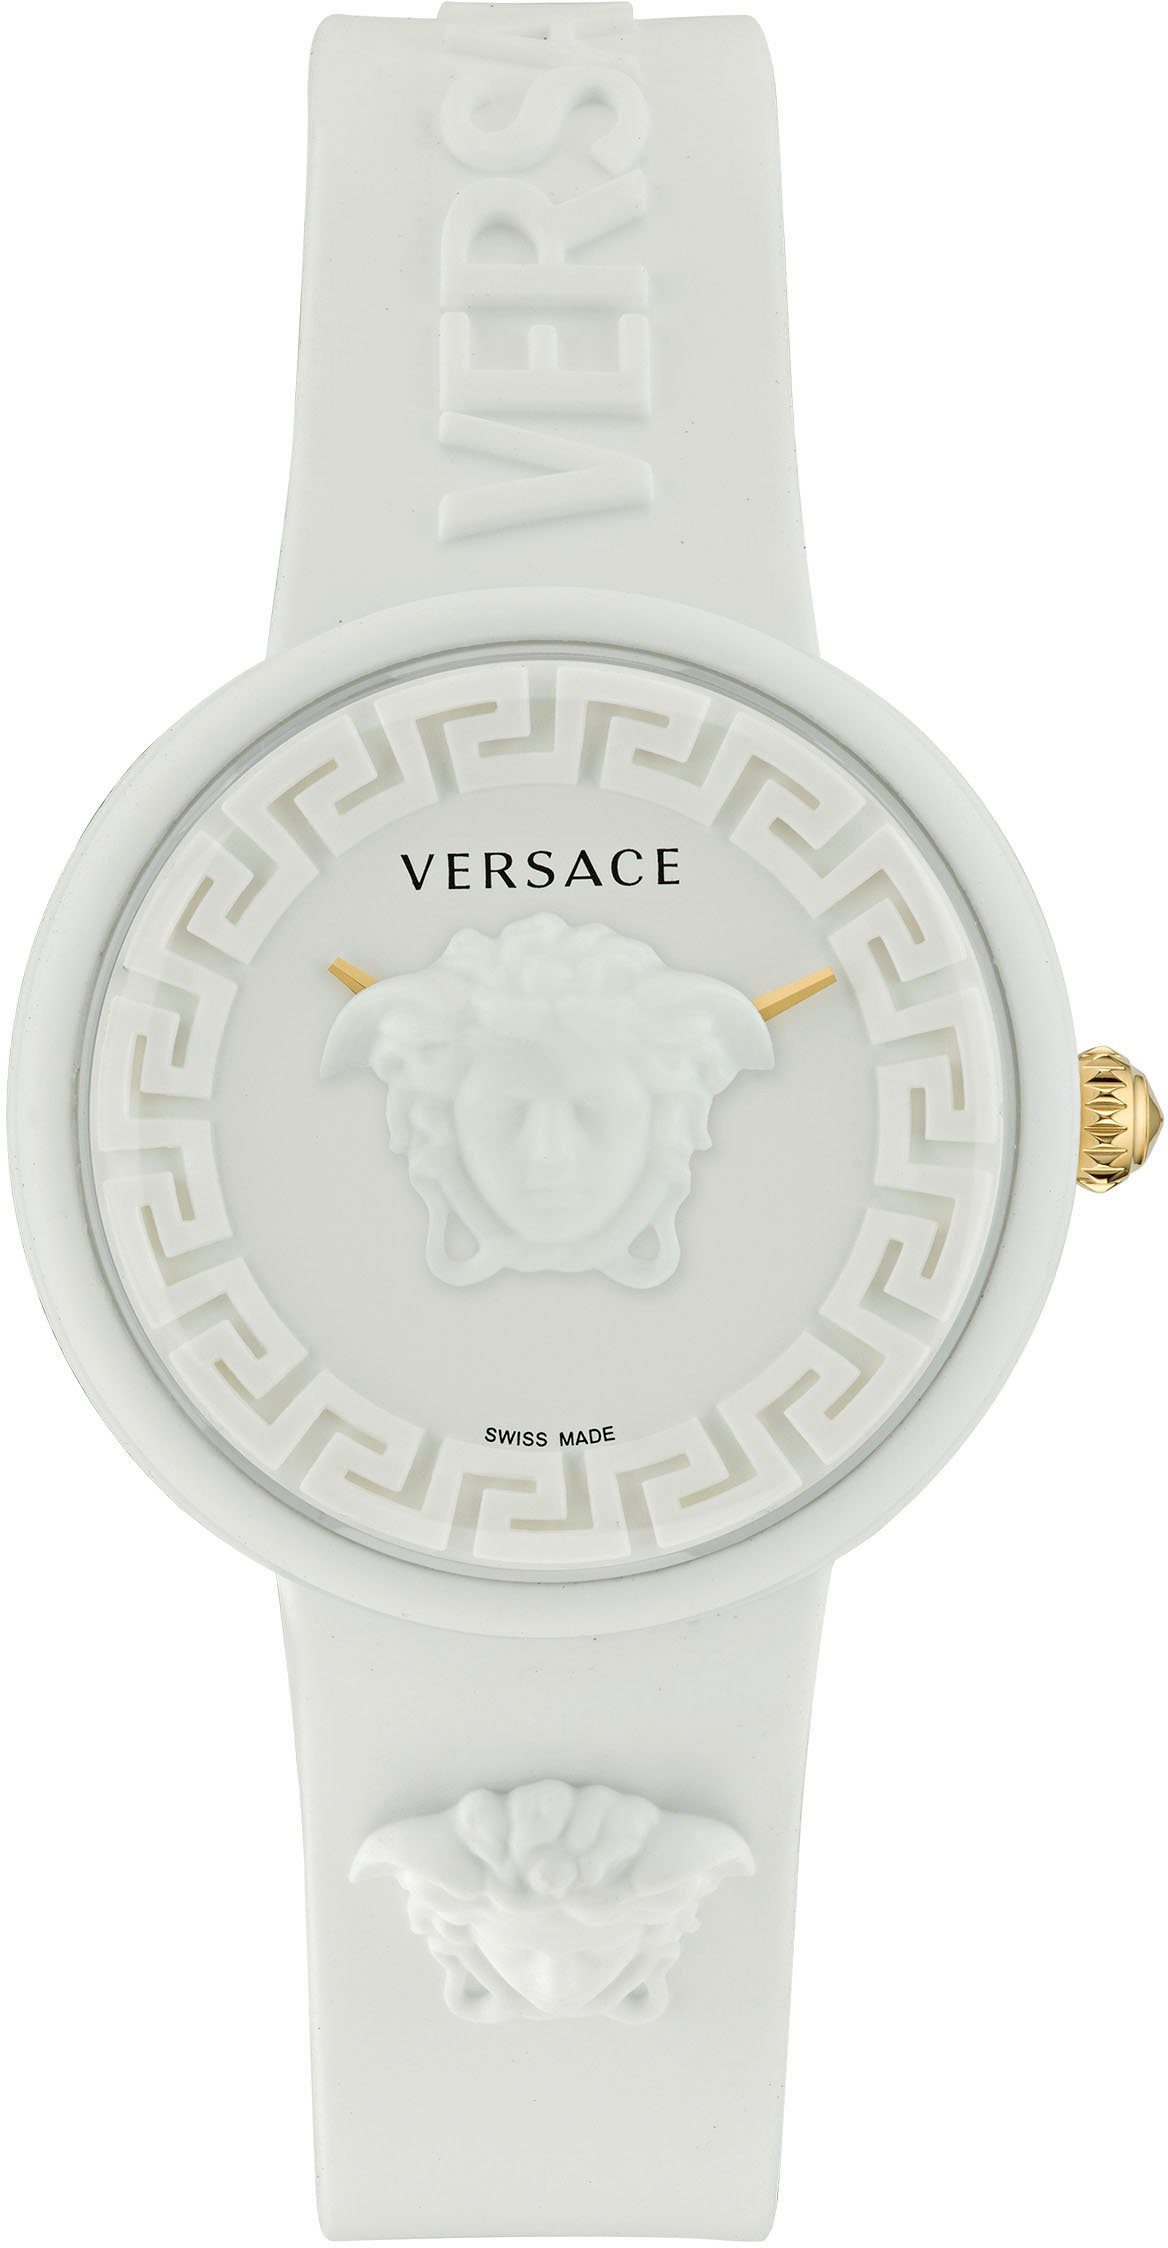 Versace Quarzuhr MEDUSA POP, VE6G00123, Armbanduhr, Damenuhr, Saphirglas, Swiss Made, analog